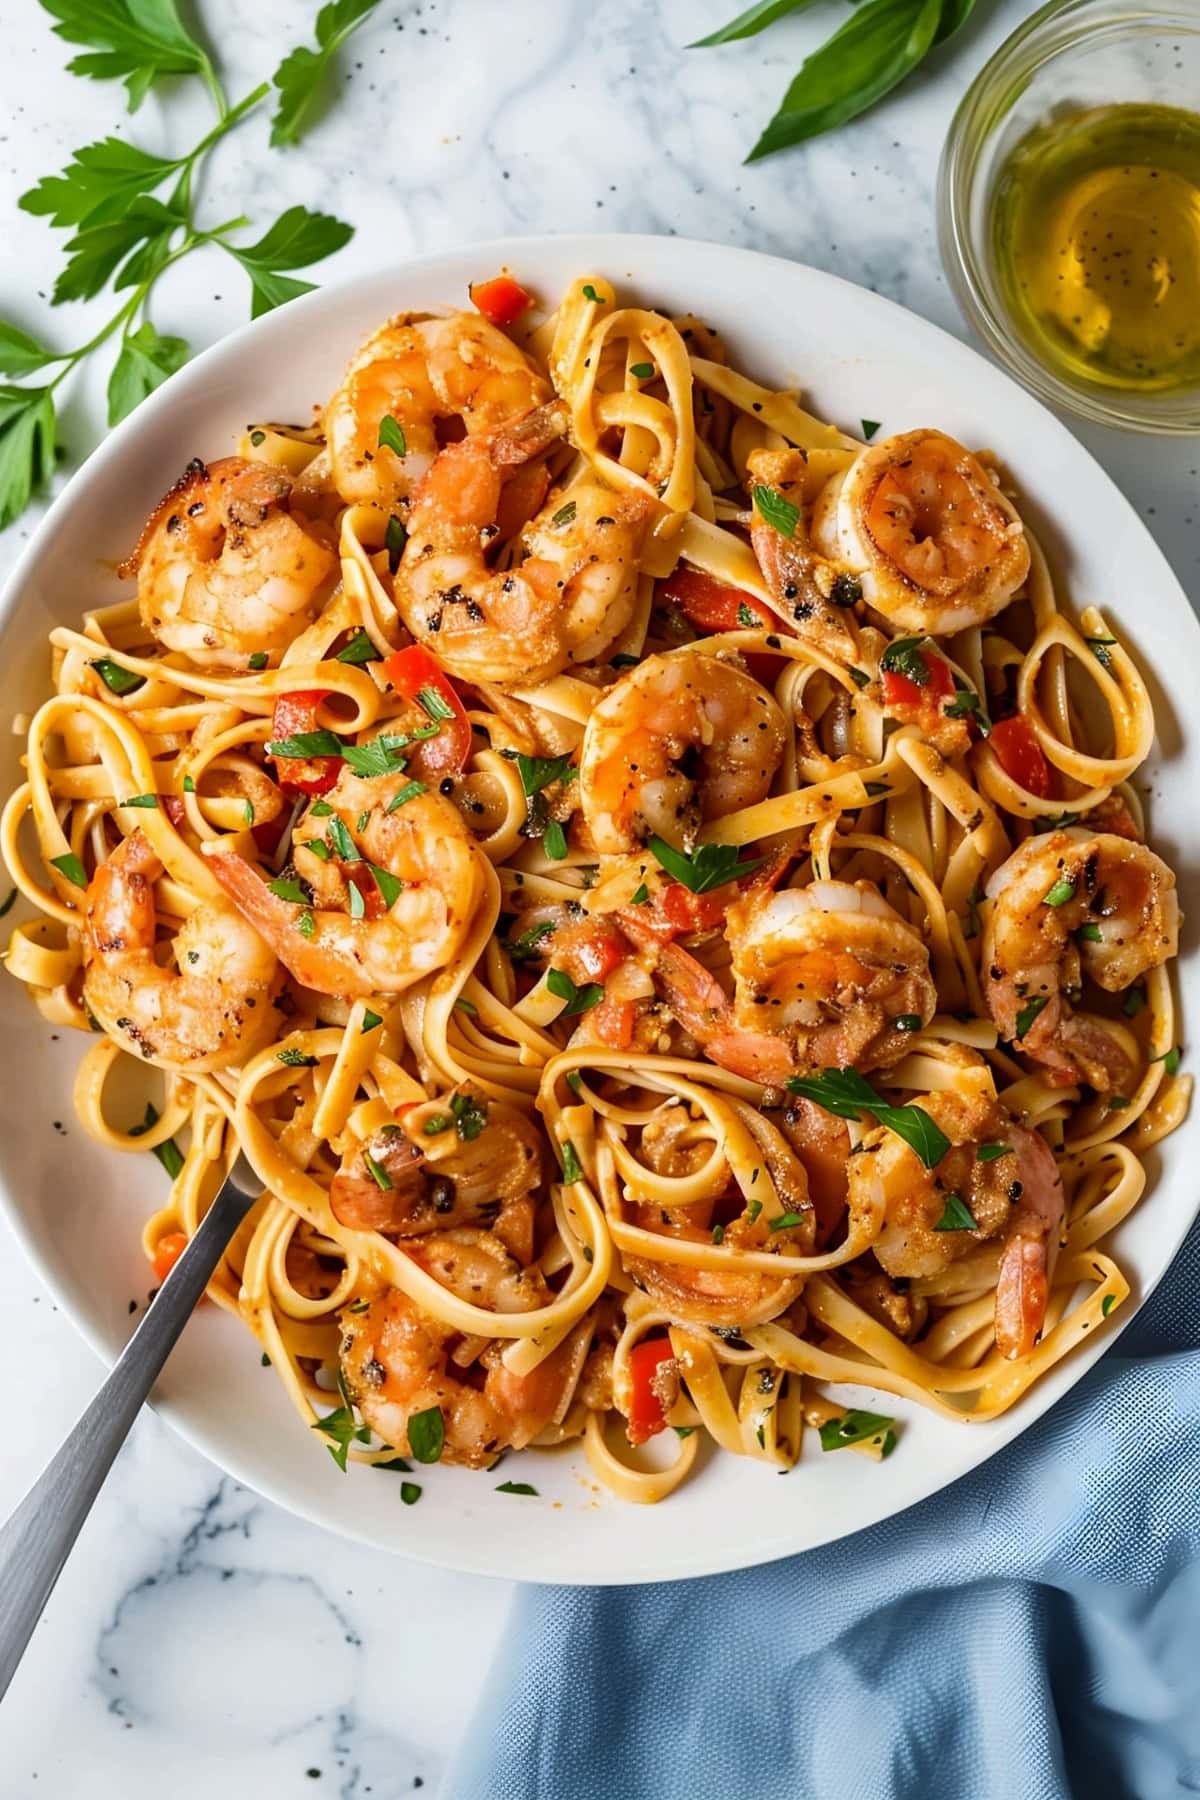 Fettucine pasta with tender shrimp and Cajun seasoning, garnished with parsley